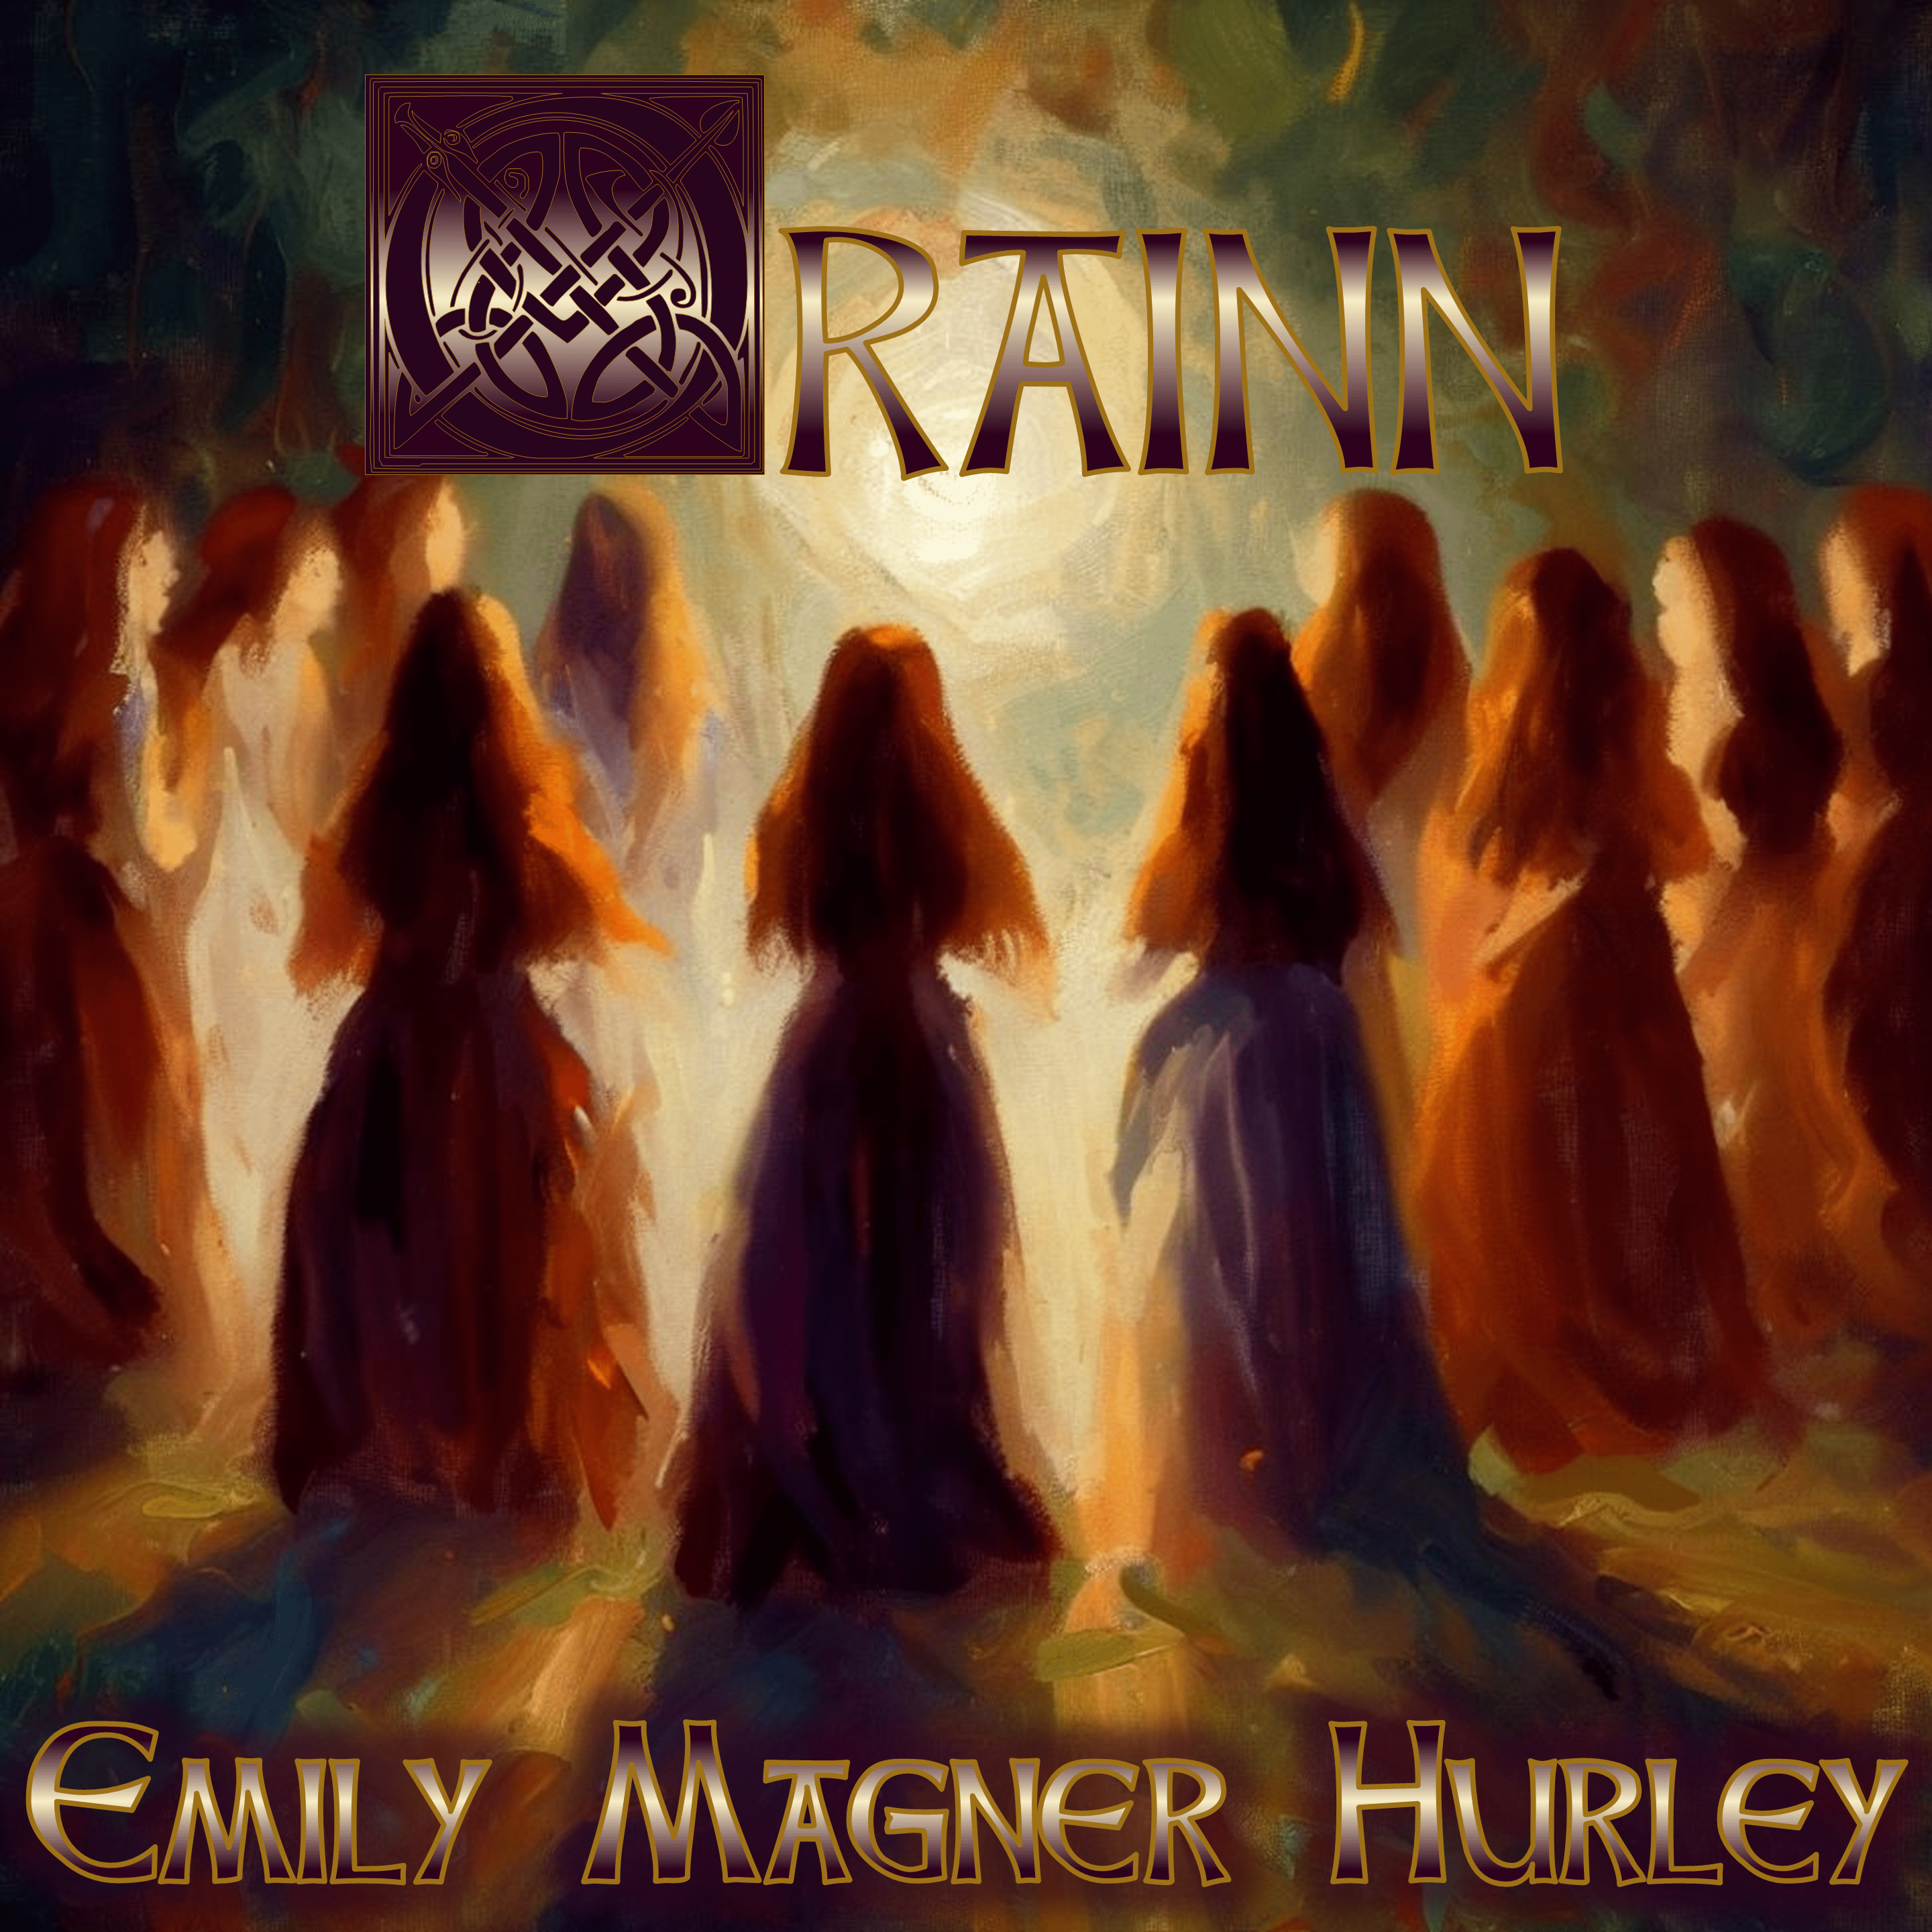 Emily Magner Hurley’s “Orainn”: A Harmonious Elixir for Mental Wellbeing